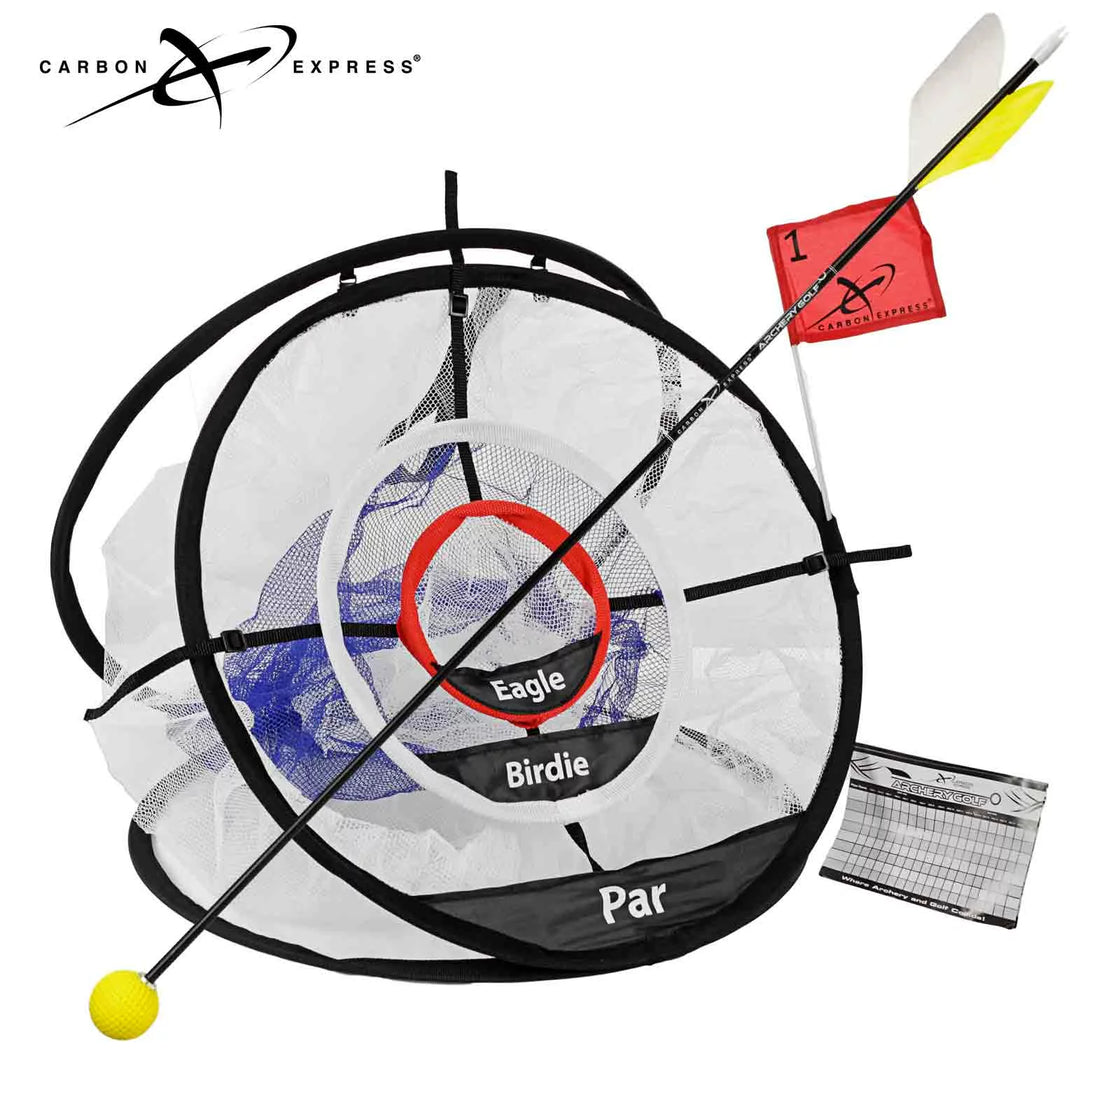 Carbon Express Archery Golf Kit